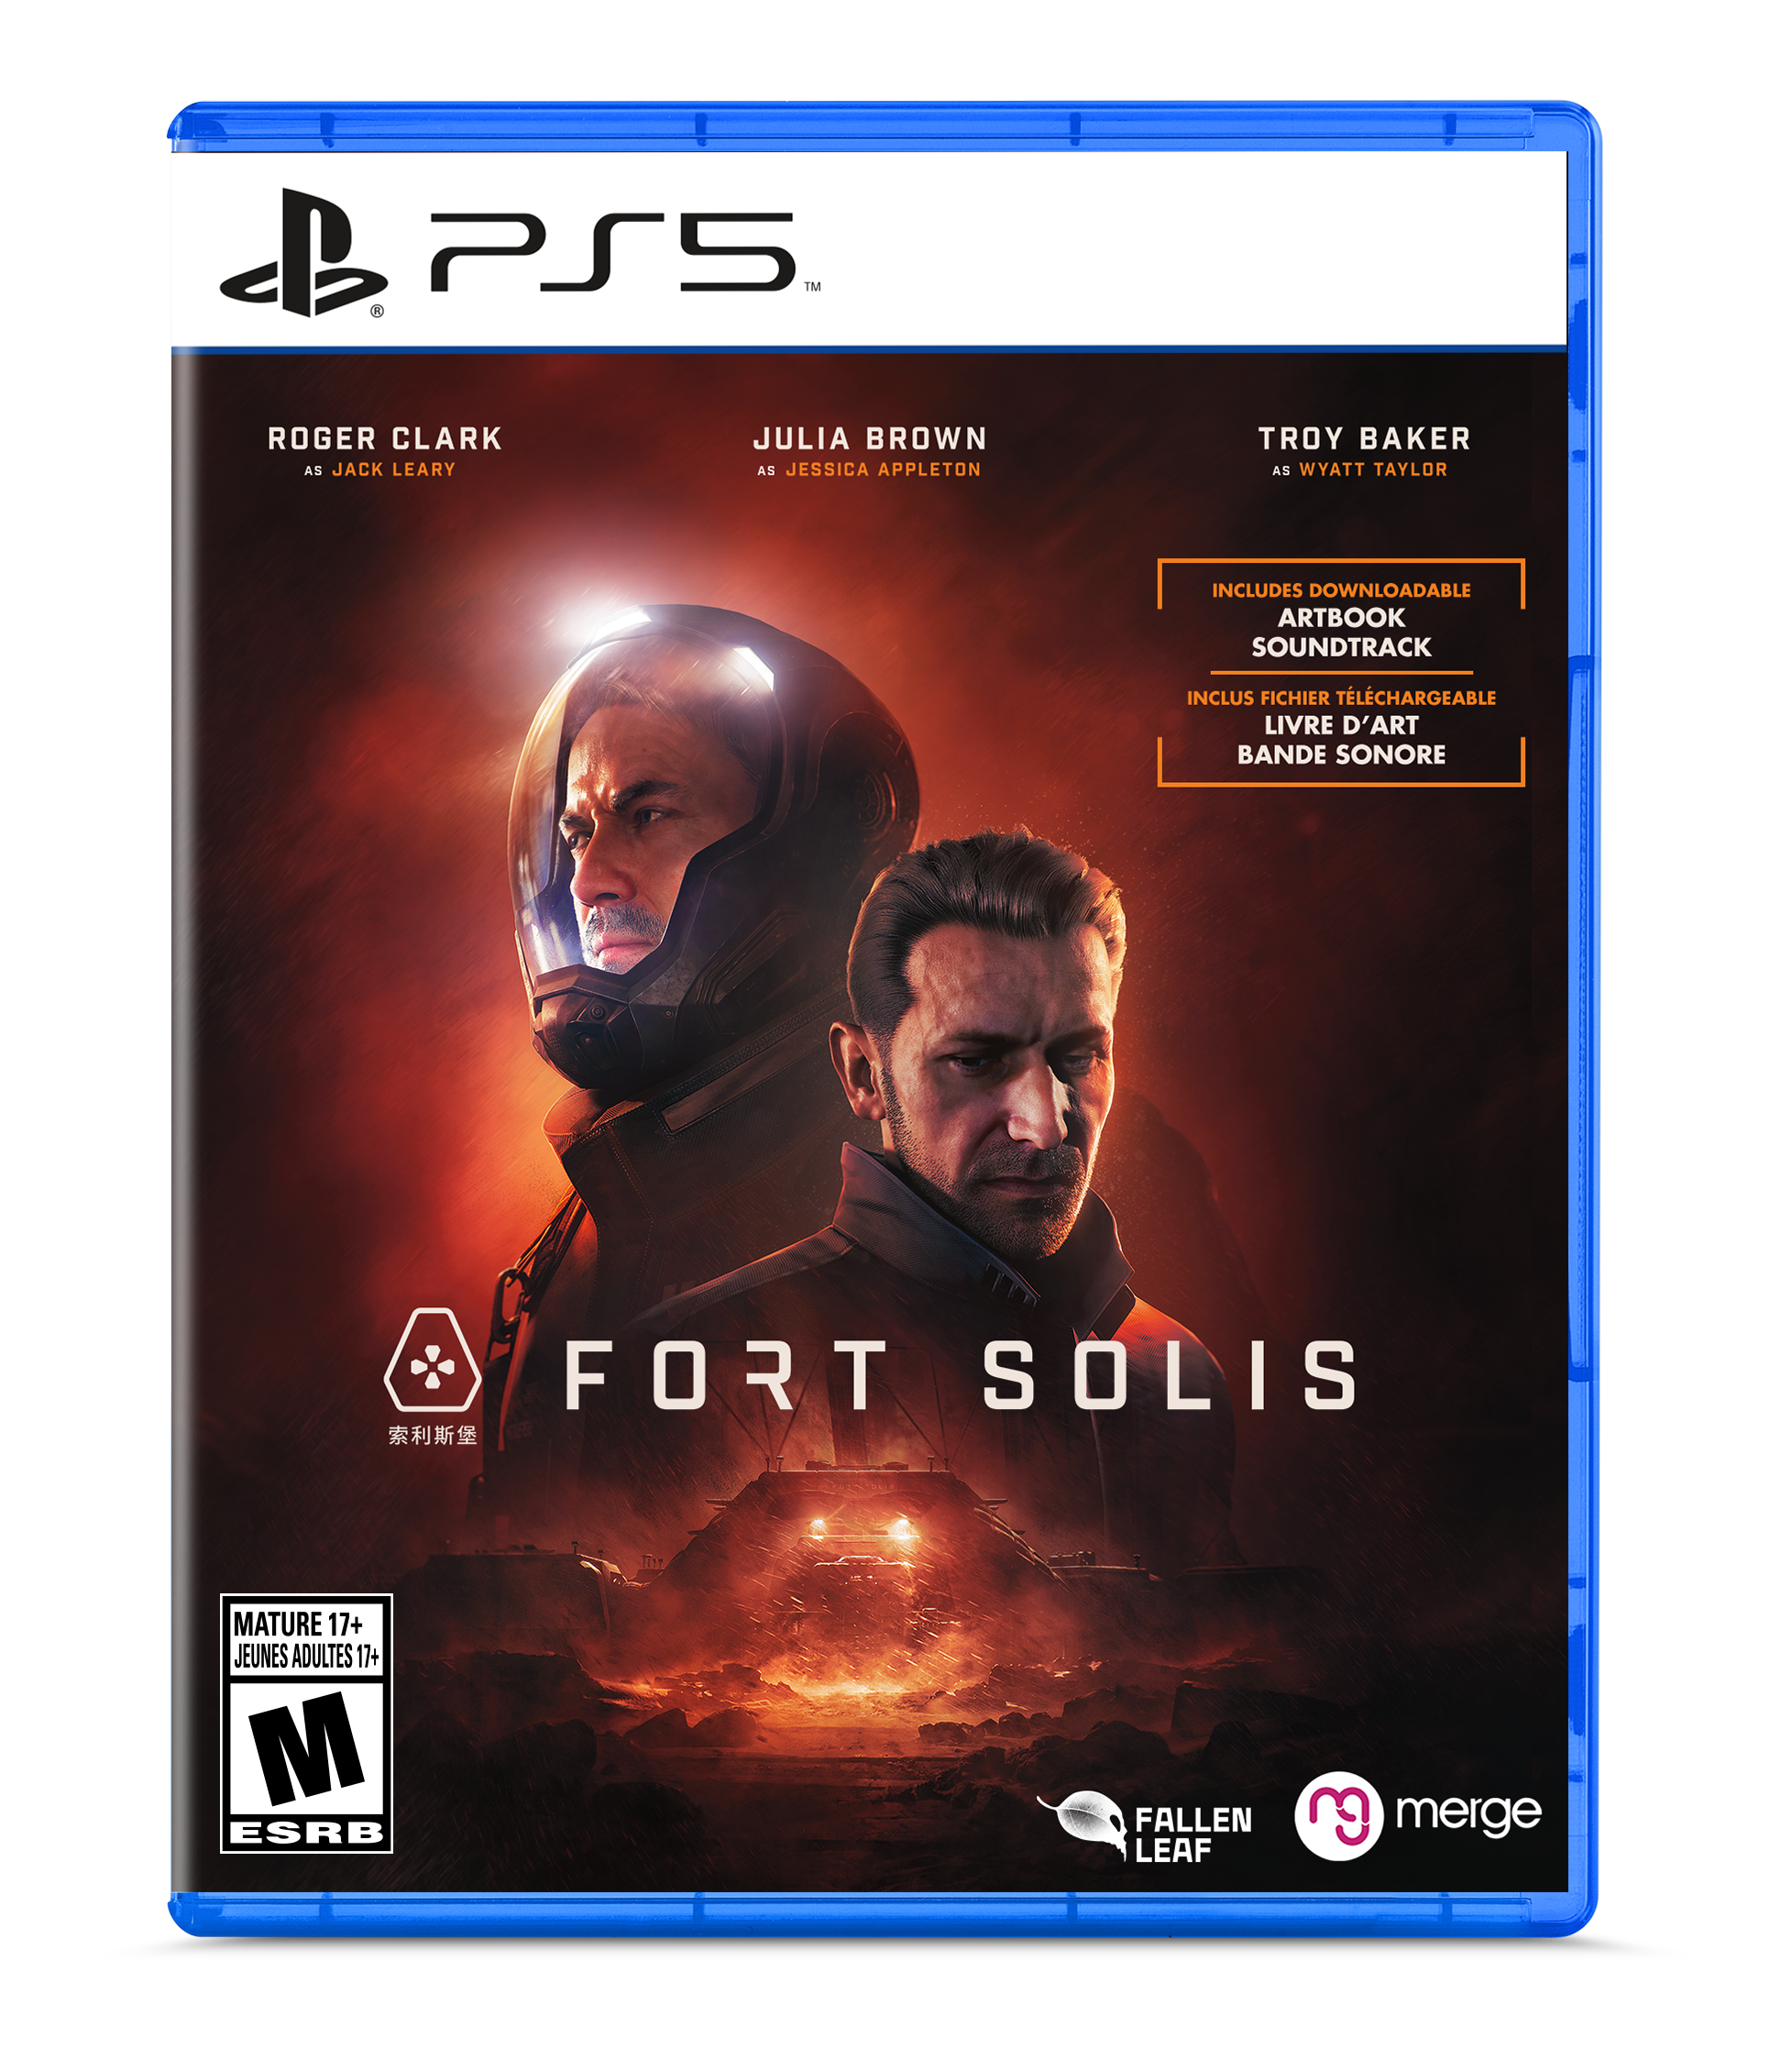 Fort Solis - PlayStation 5